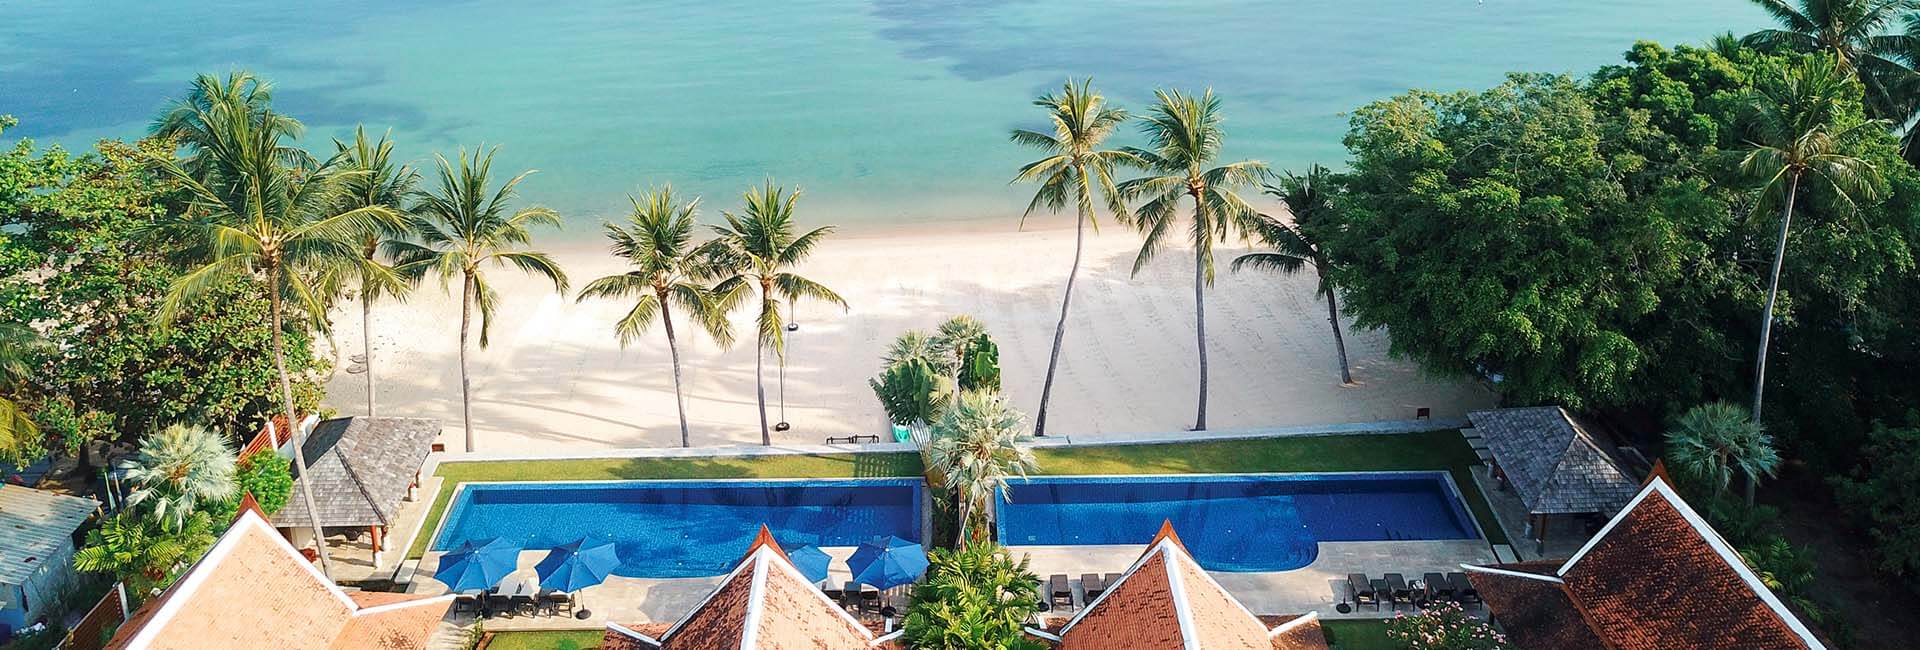 Rates and Availability | Tawantok Beach Villas - Lipa Noi, Koh Samui ...